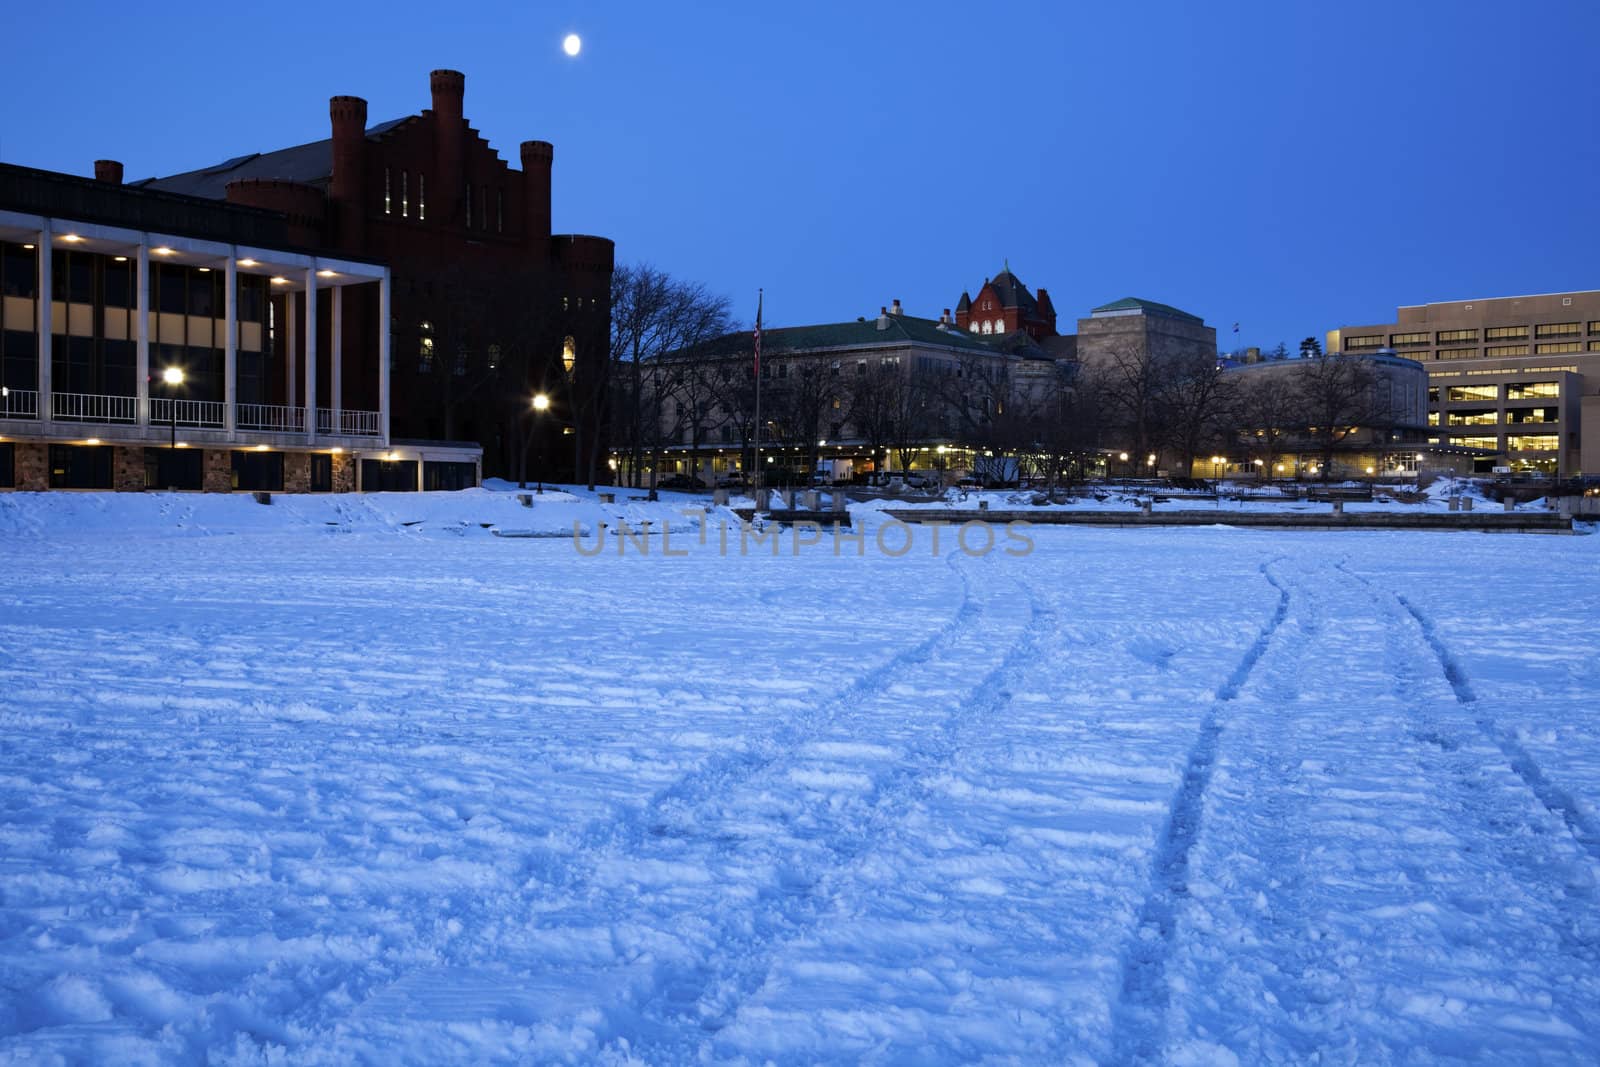 Historic Buildings - University of Wisconsin by benkrut